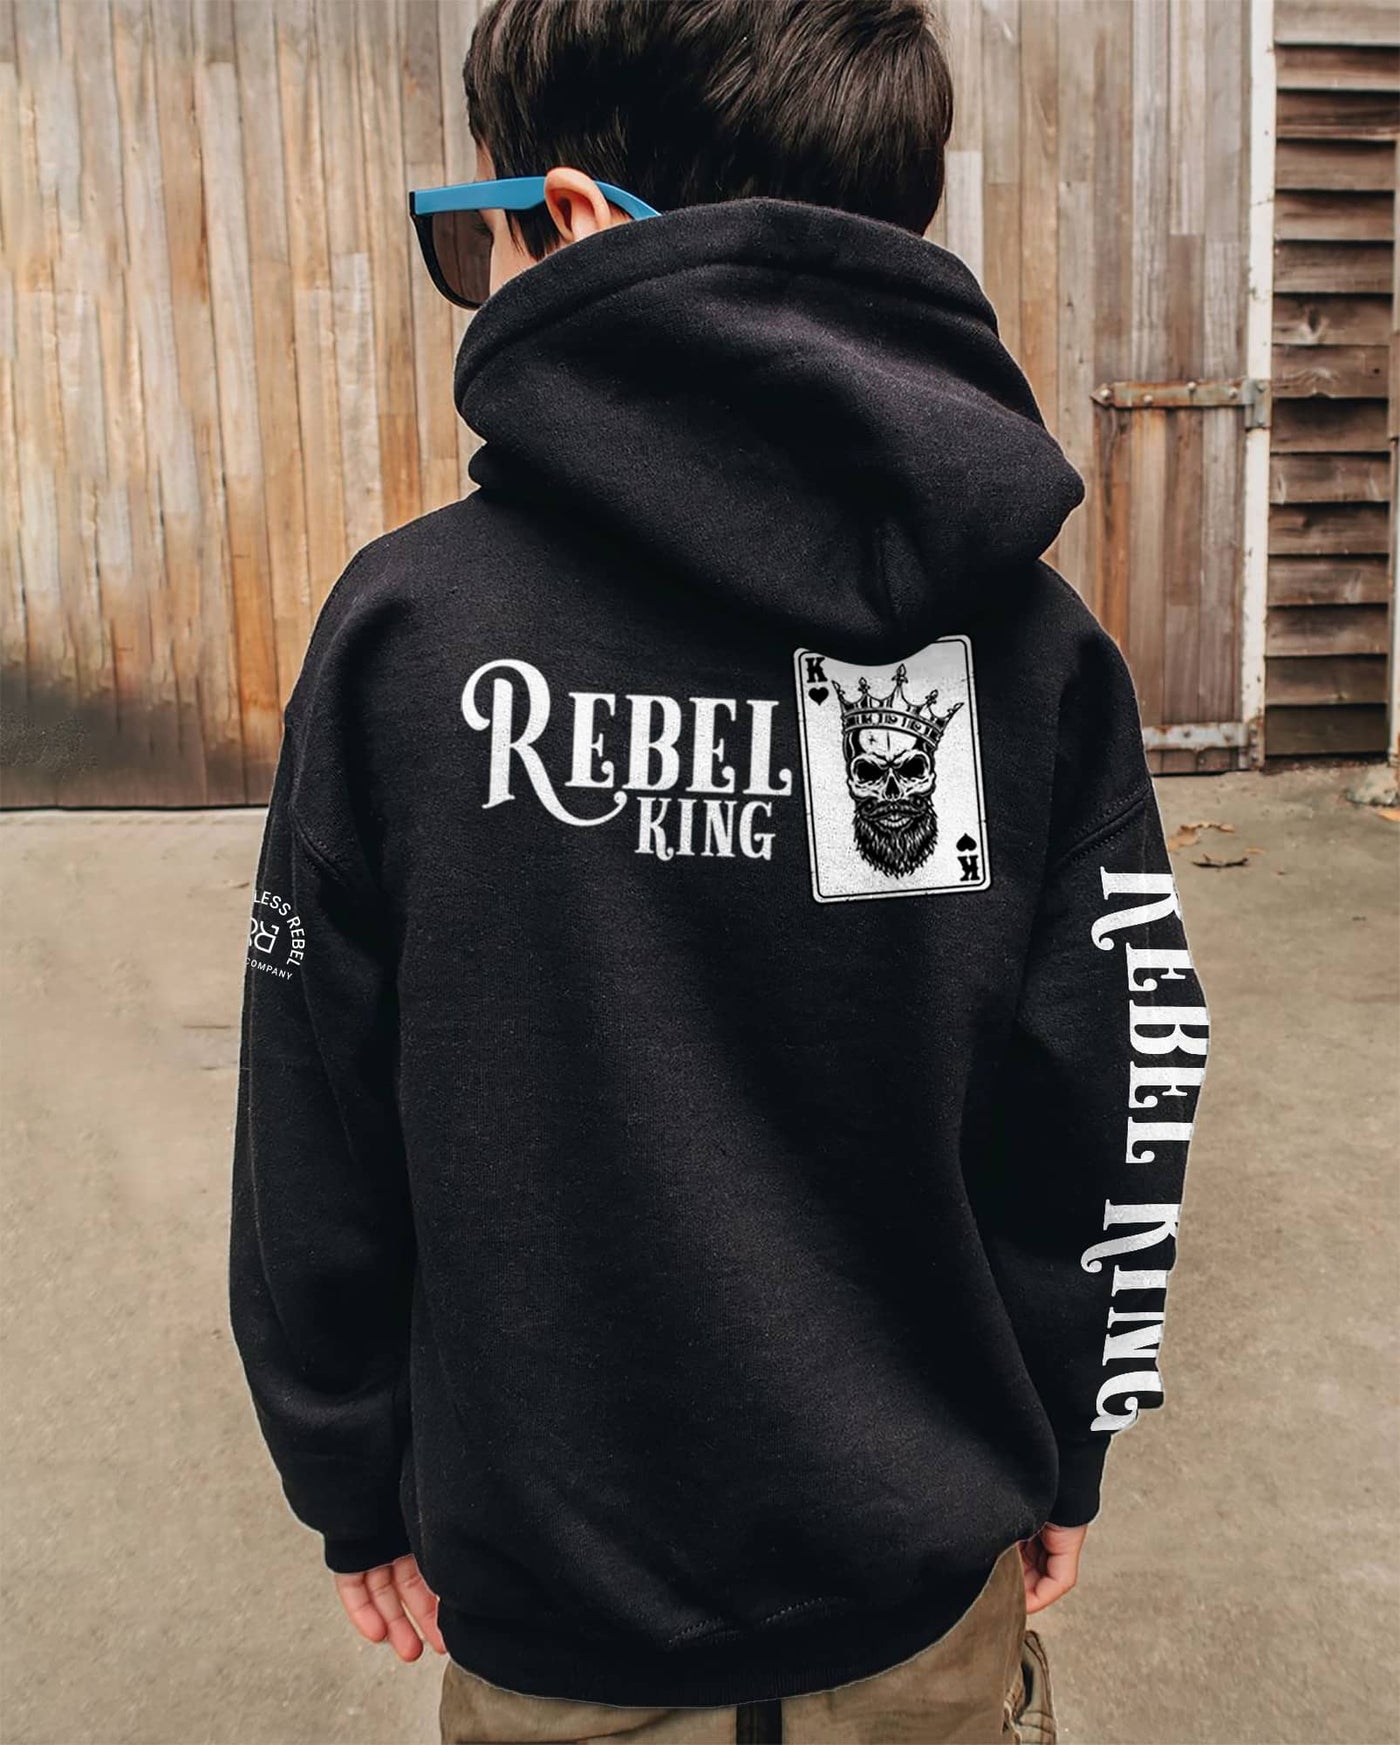 Boy wearing Solid Black Youth Rebel King Sleeve and Back Design Hoodie